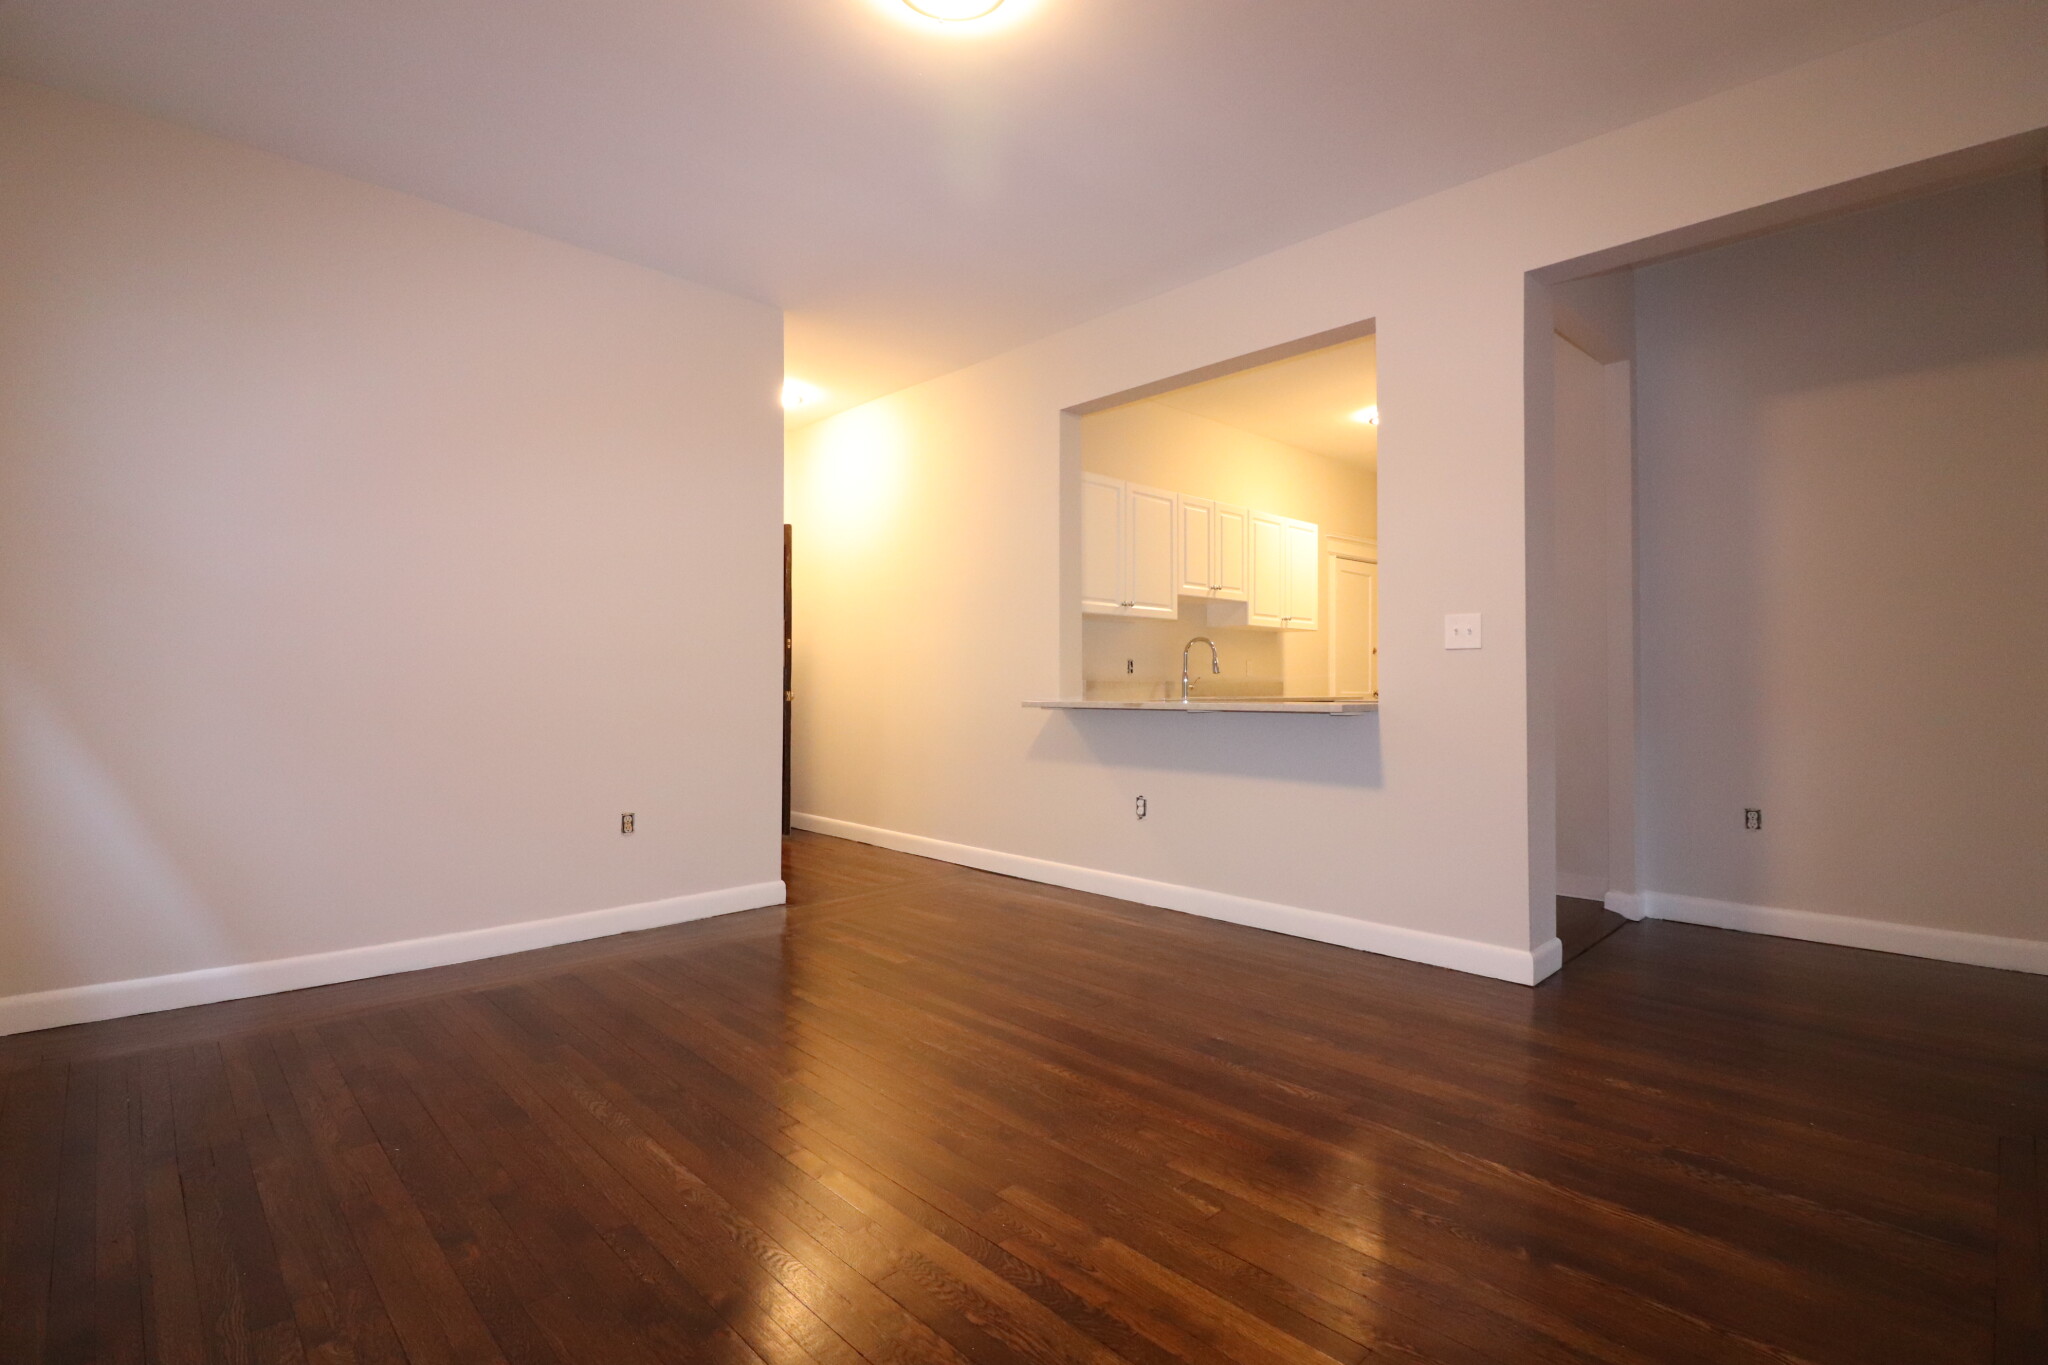 Photos of apartment on Alton Ct.,Brookline MA 02446